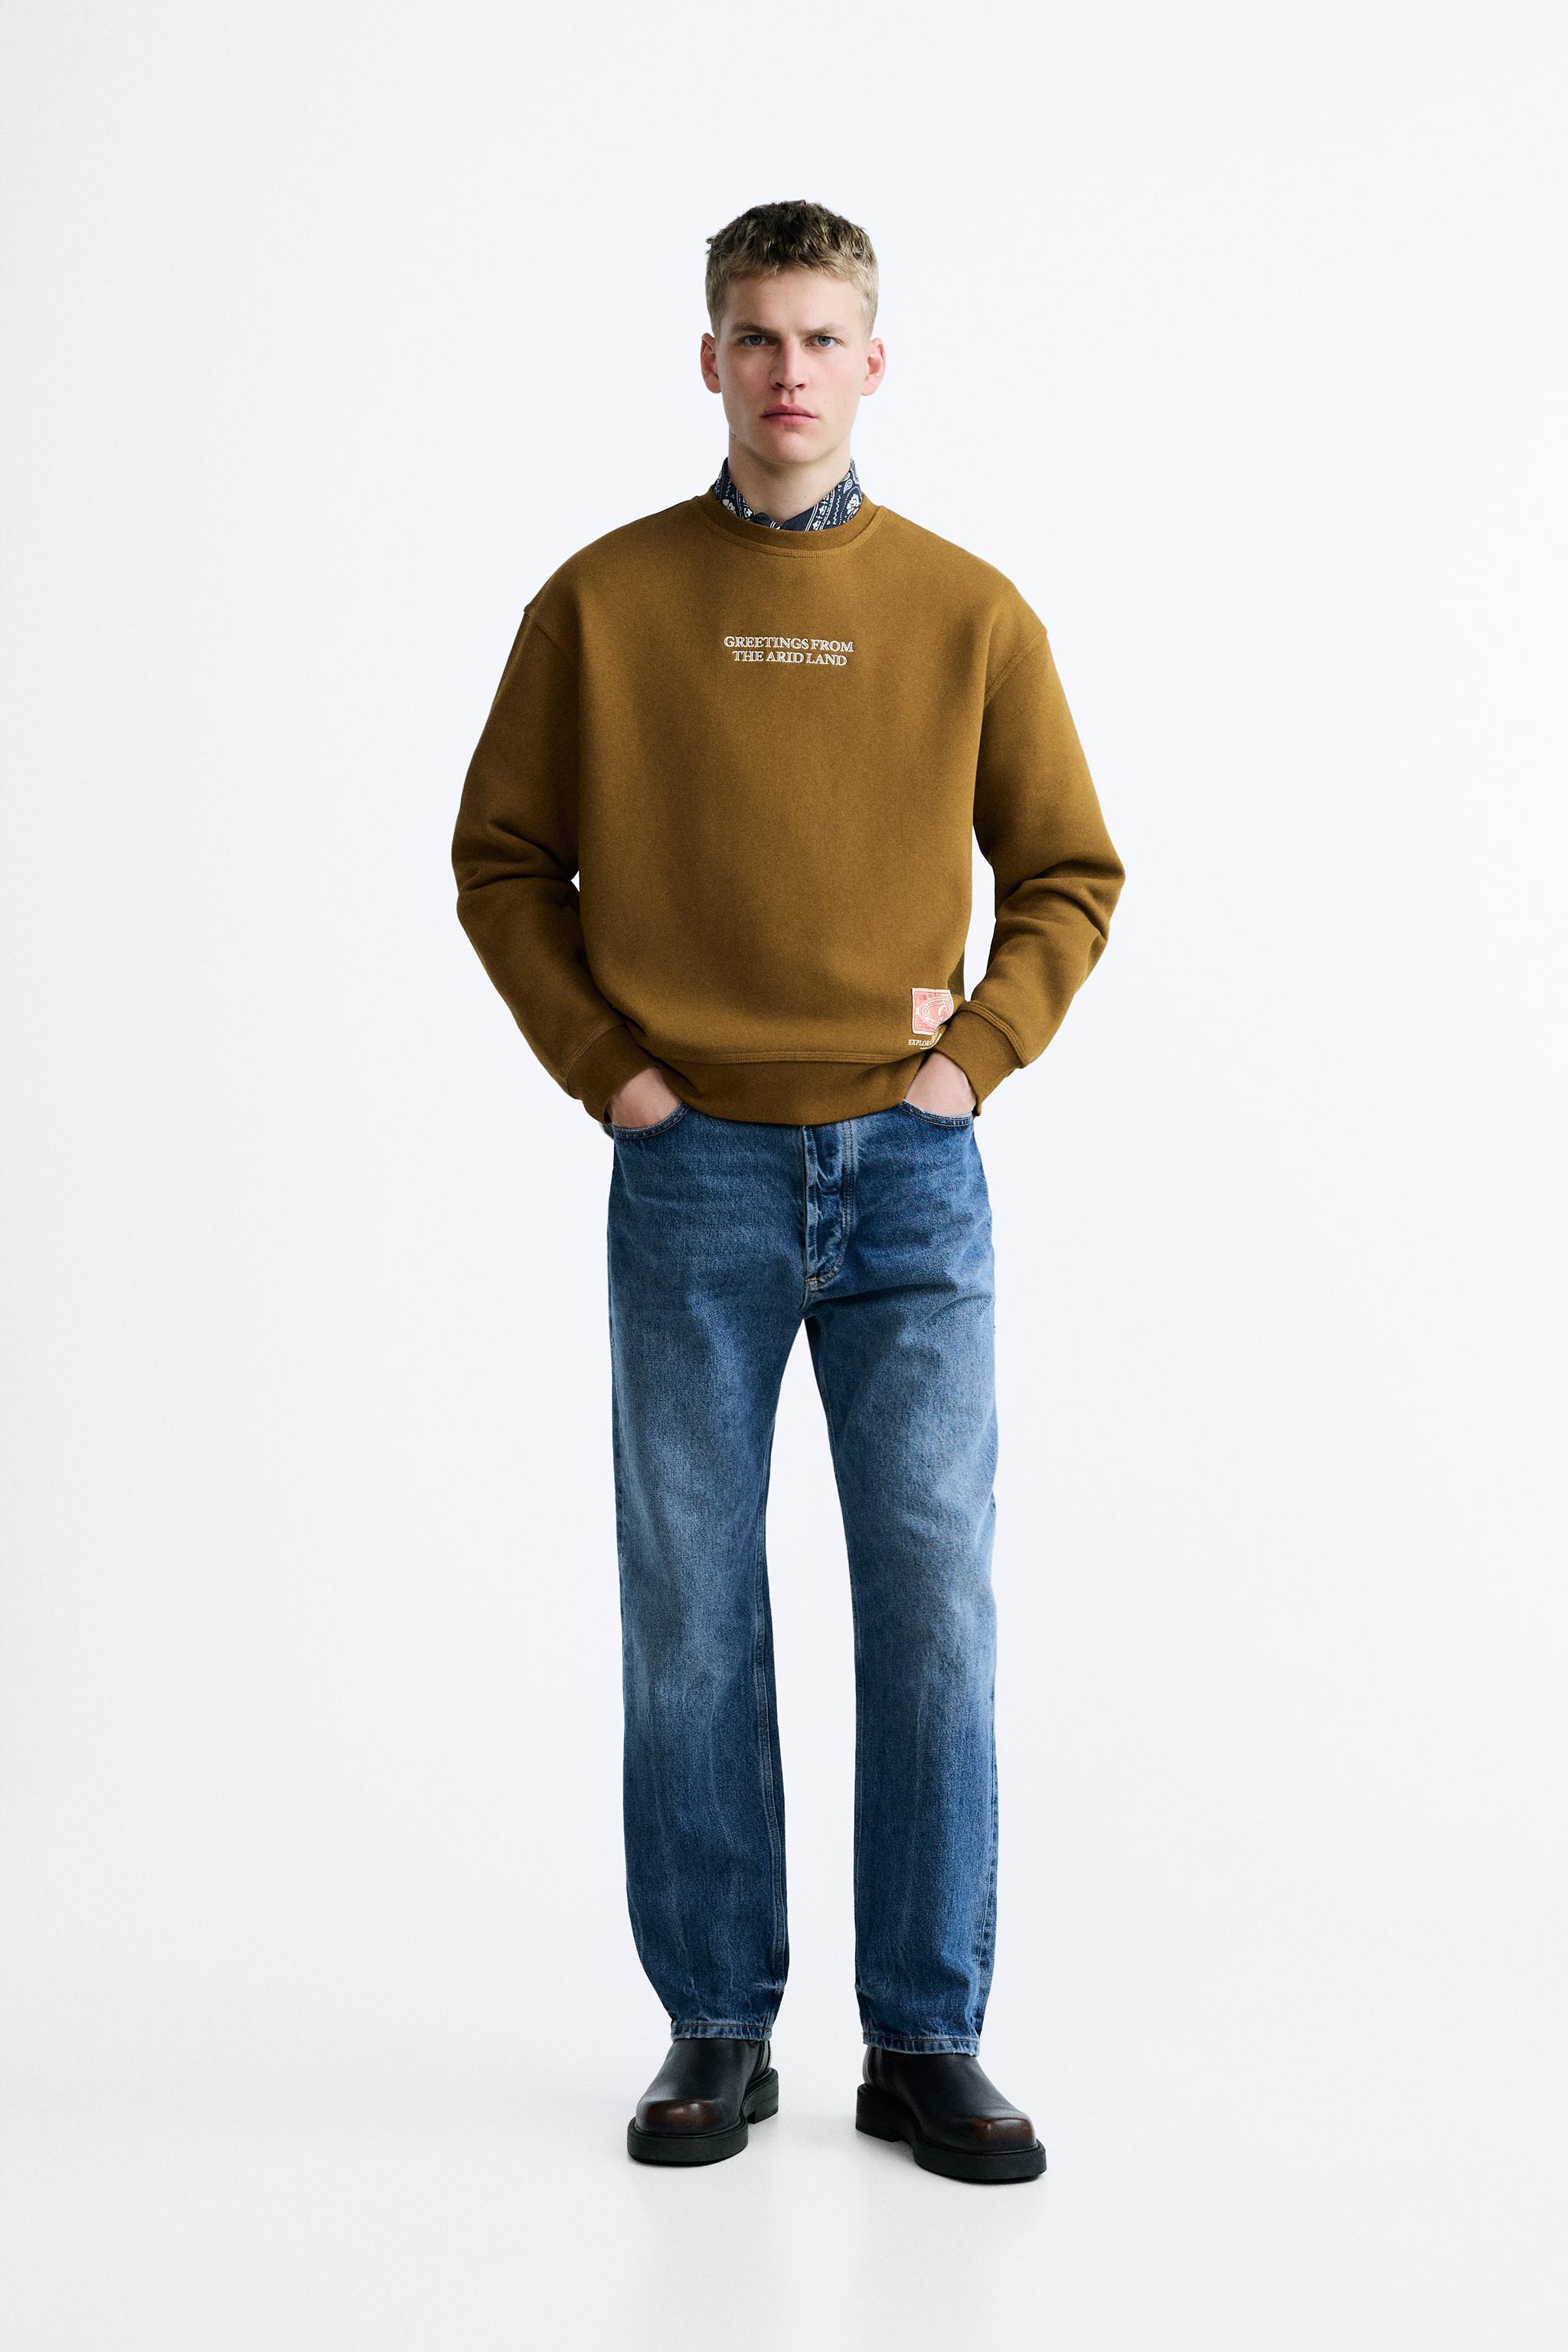 Zara Sweatshirts & Jumpers for Men on sale - Best Prices in